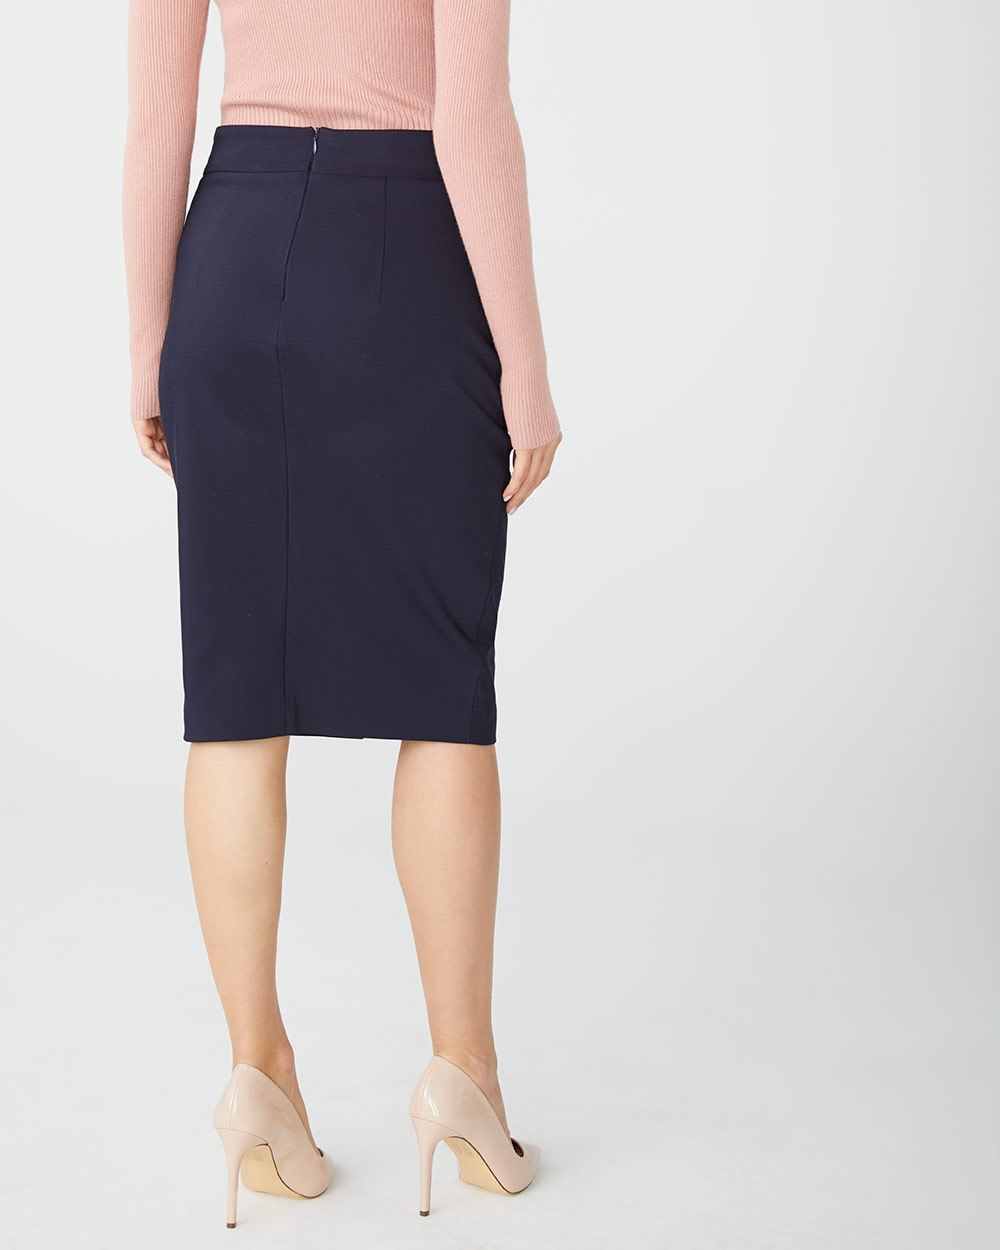 High-waist Modern chic pencil skirt with slit | RW&CO.